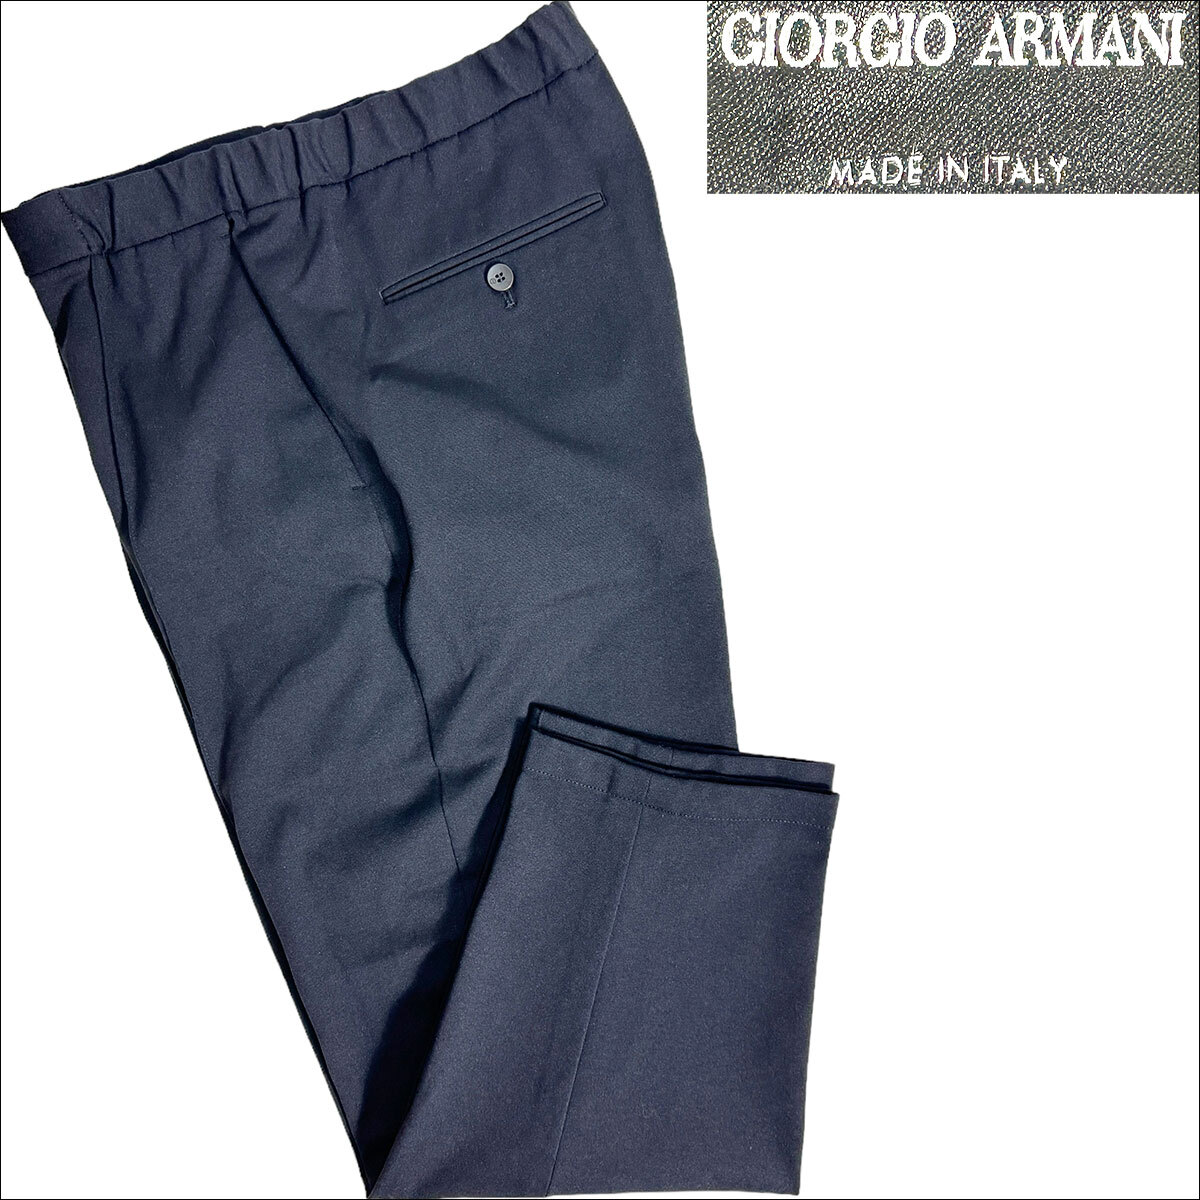 J5032 прекрасный товар joru geo Armani чёрный бирка легкий k lease джерси - брюки черный 50 GIORGIO ARMANI